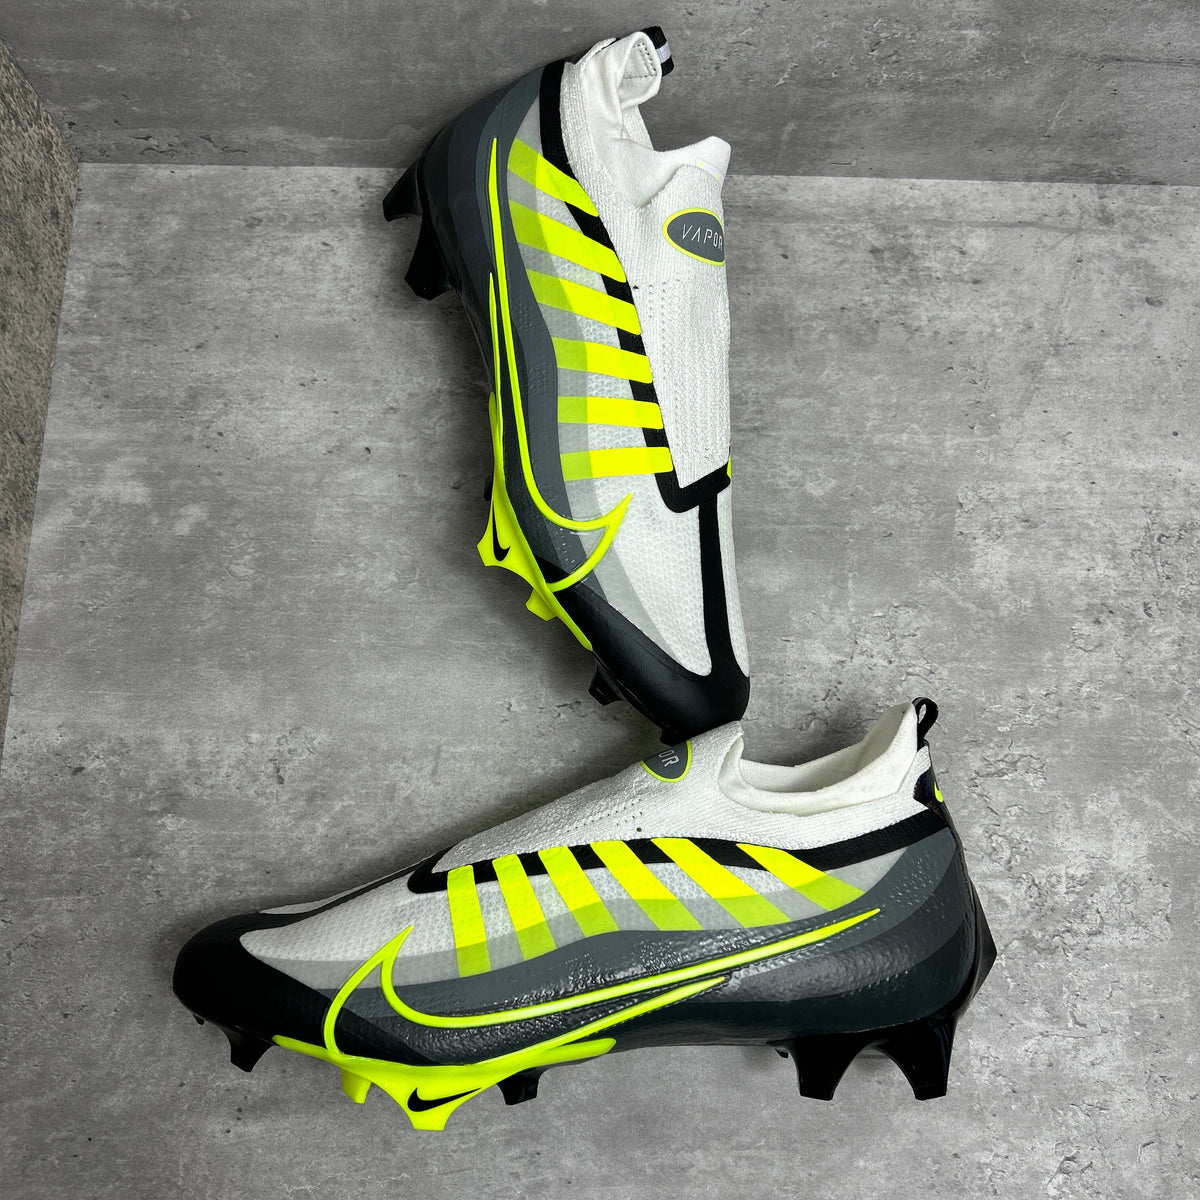 Nike VaporEdge Neon Boots